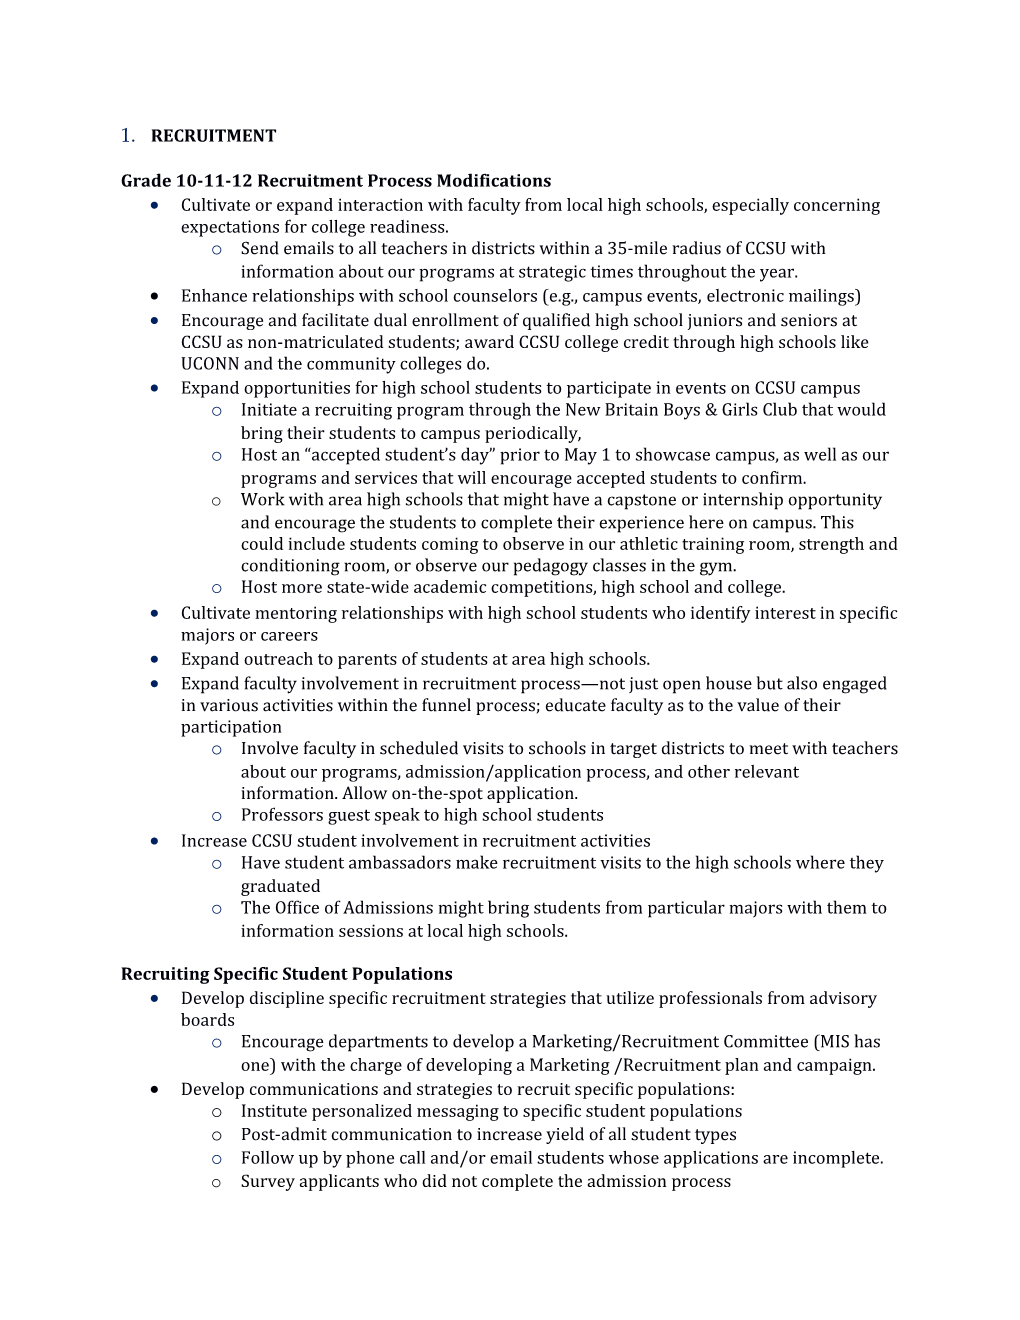 Grade 10-11-12 Recruitment Process Modifications